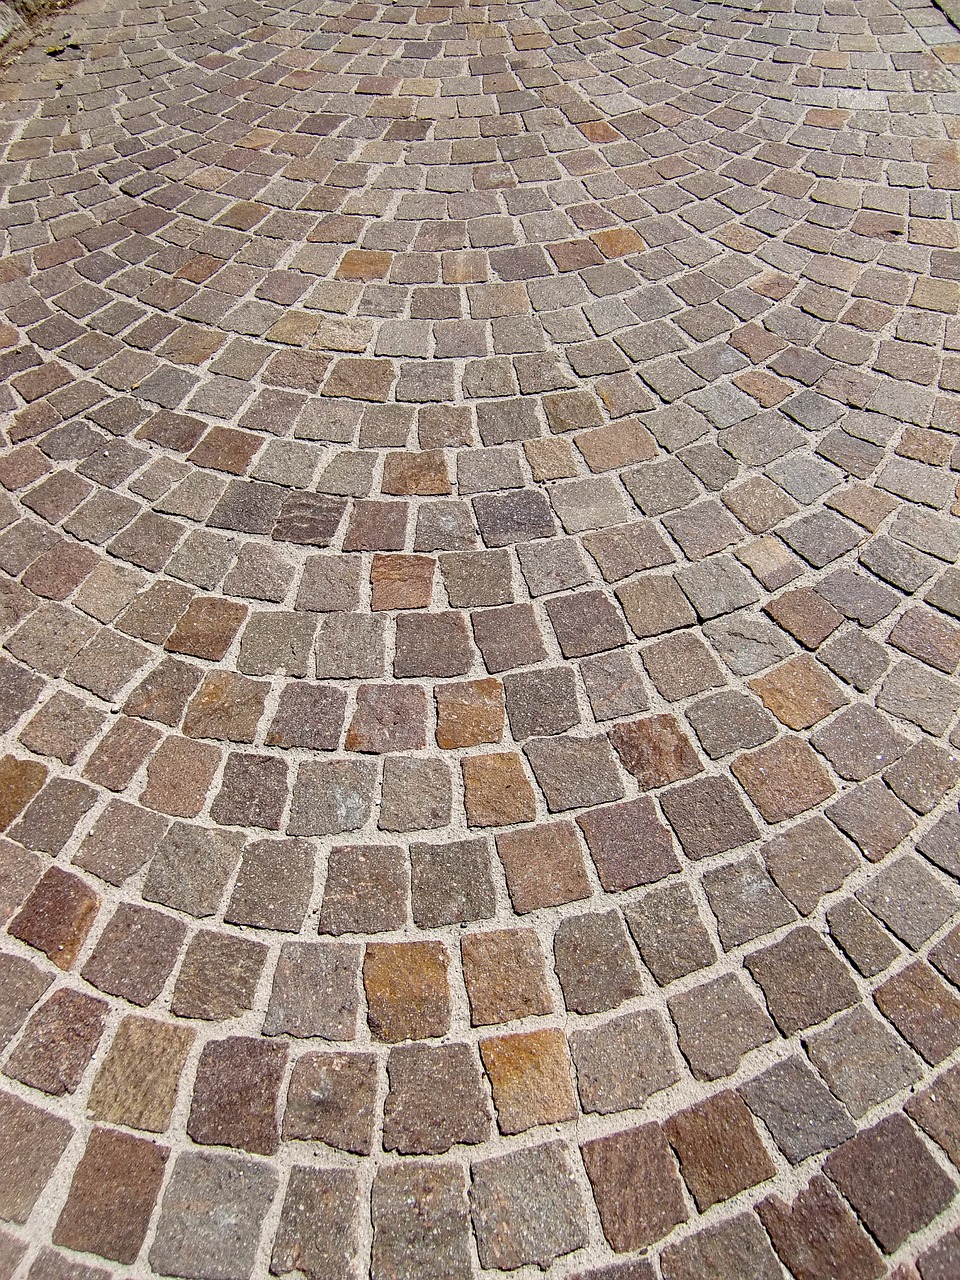 patch pavement paving stones free photo